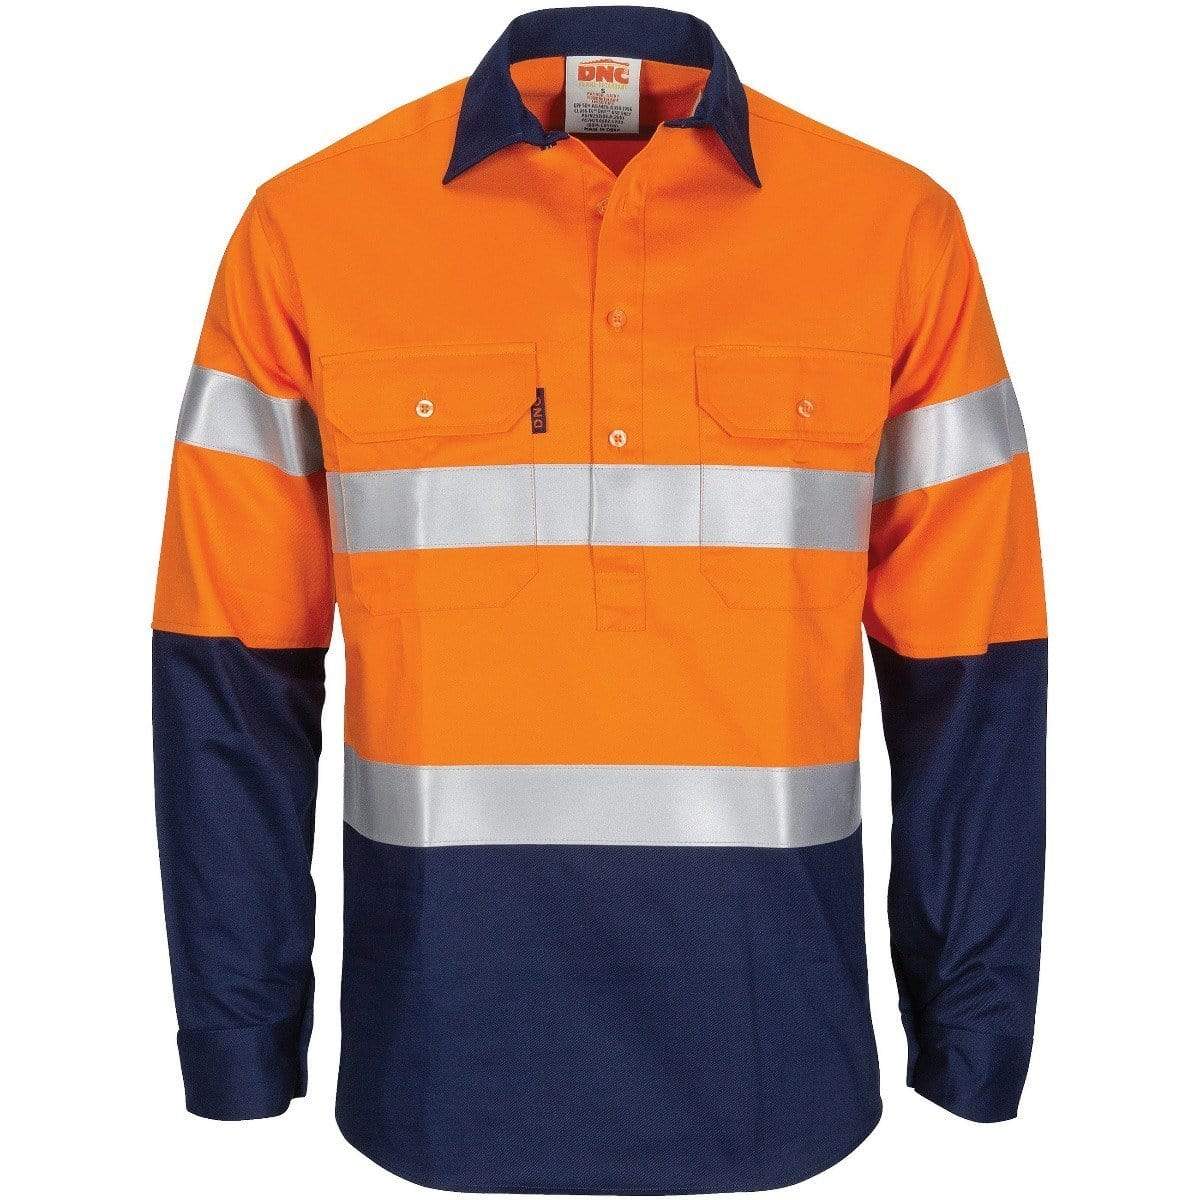 Dnc Workwear Patron Saint Flame Retardant 2 Tone Closed Front Cotton Shirt With 3m Fr Tape - 3407 Work Wear DNC Workwear Orange/Navy XS 